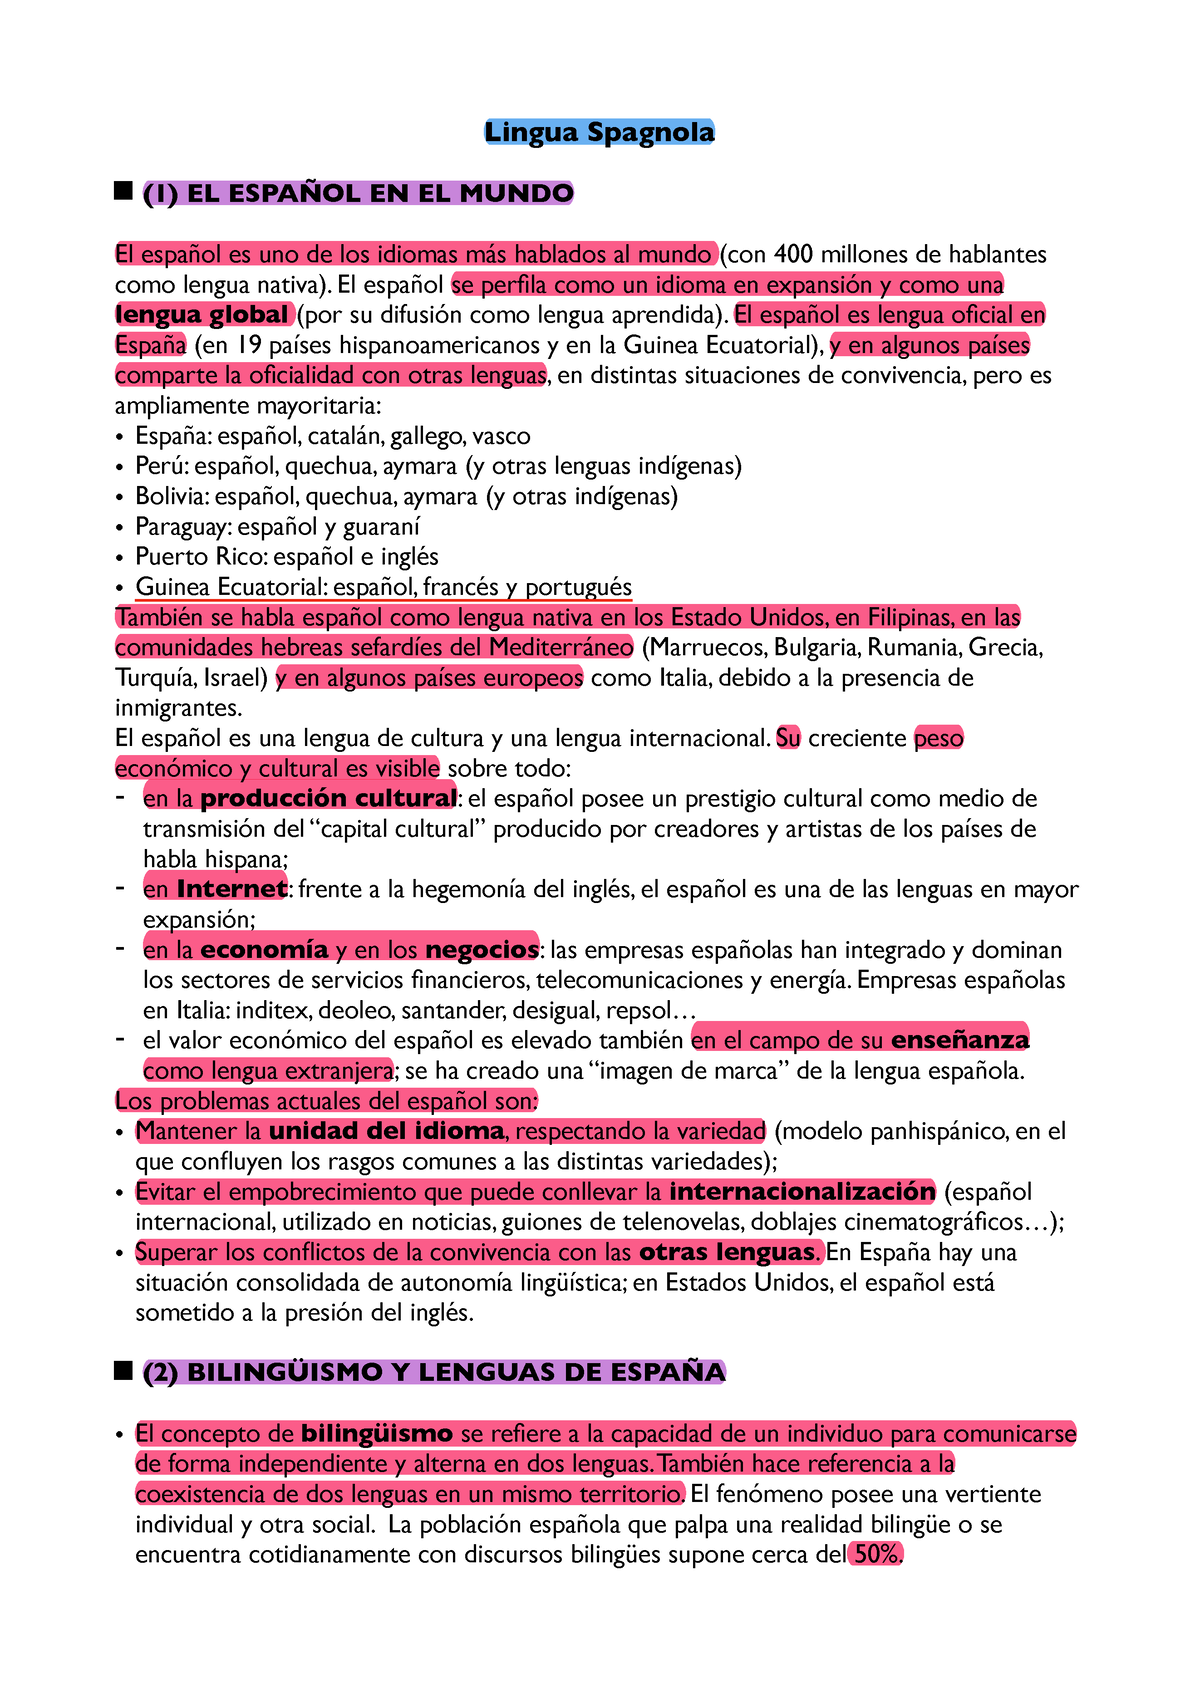 Linguistica spagnola: semántica e lexicografía/ lenguajes sectoriales, Appunti di Linguistica Spagnola